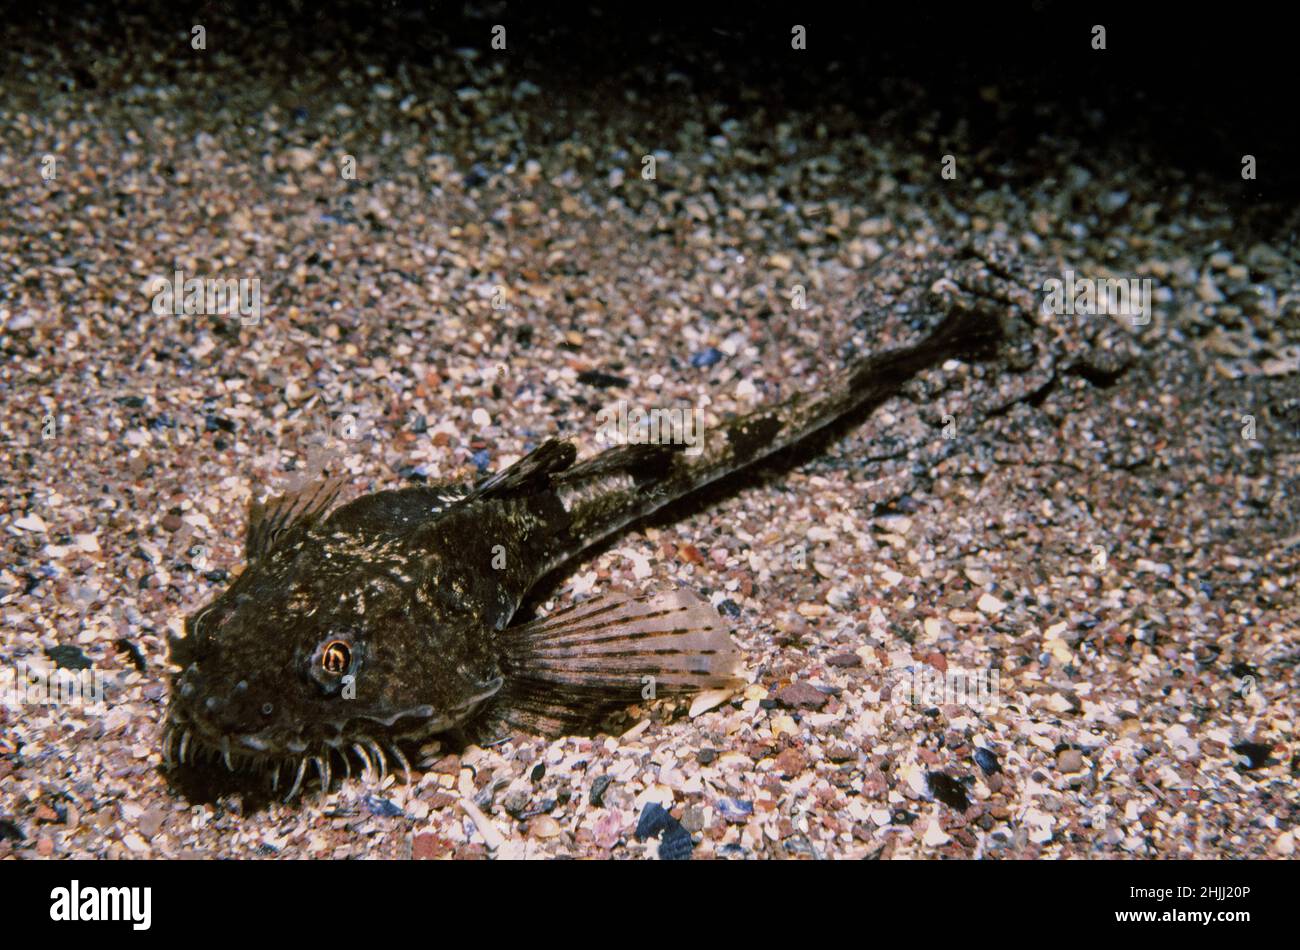 Pogge (Agonus cataphractus) on a gavelly seabed, UK. Stock Photo